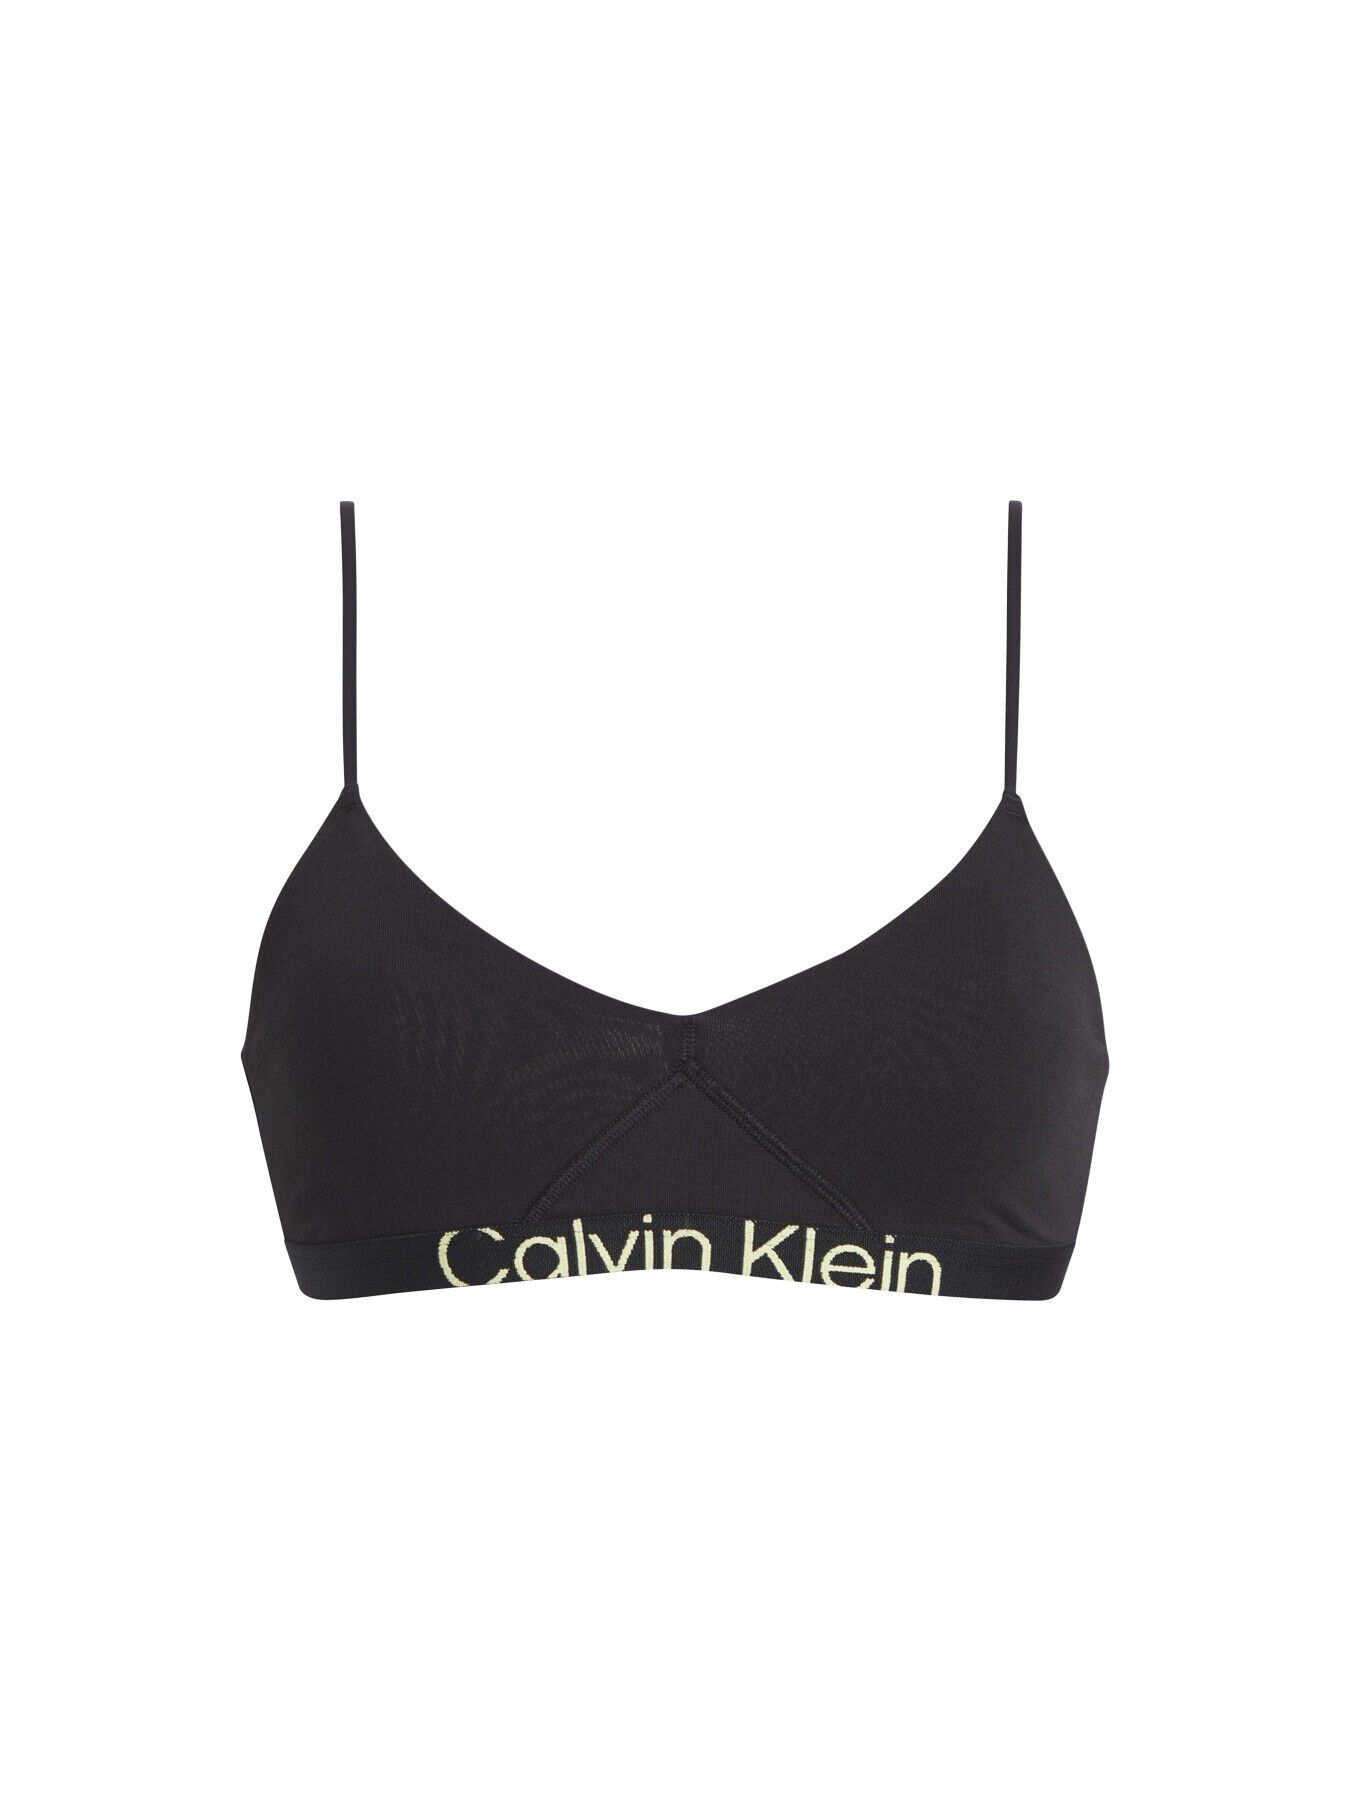 CALVIN KLEIN Intrinsic Unlined Bralette in Black